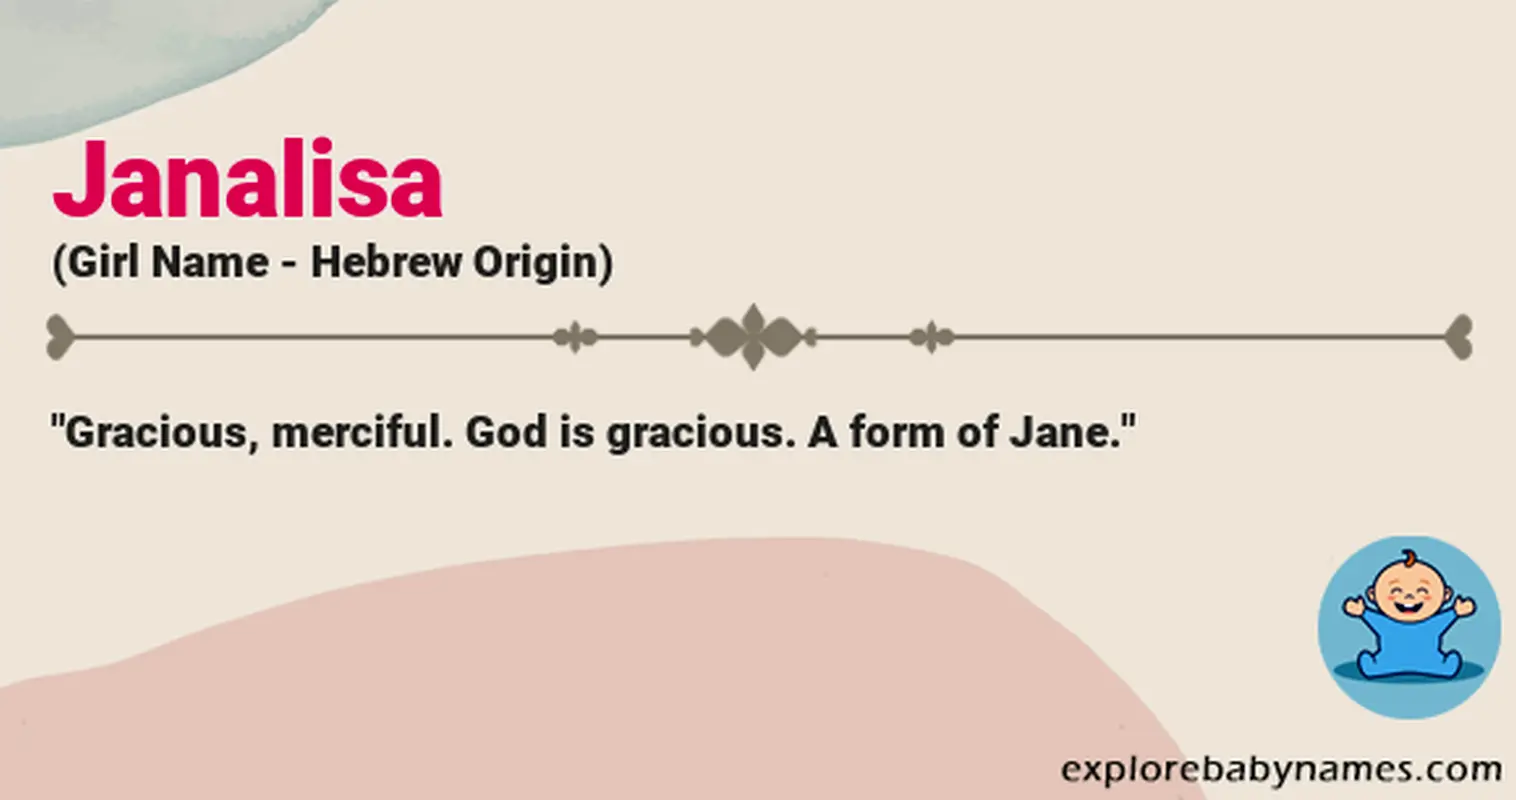 Meaning of Janalisa